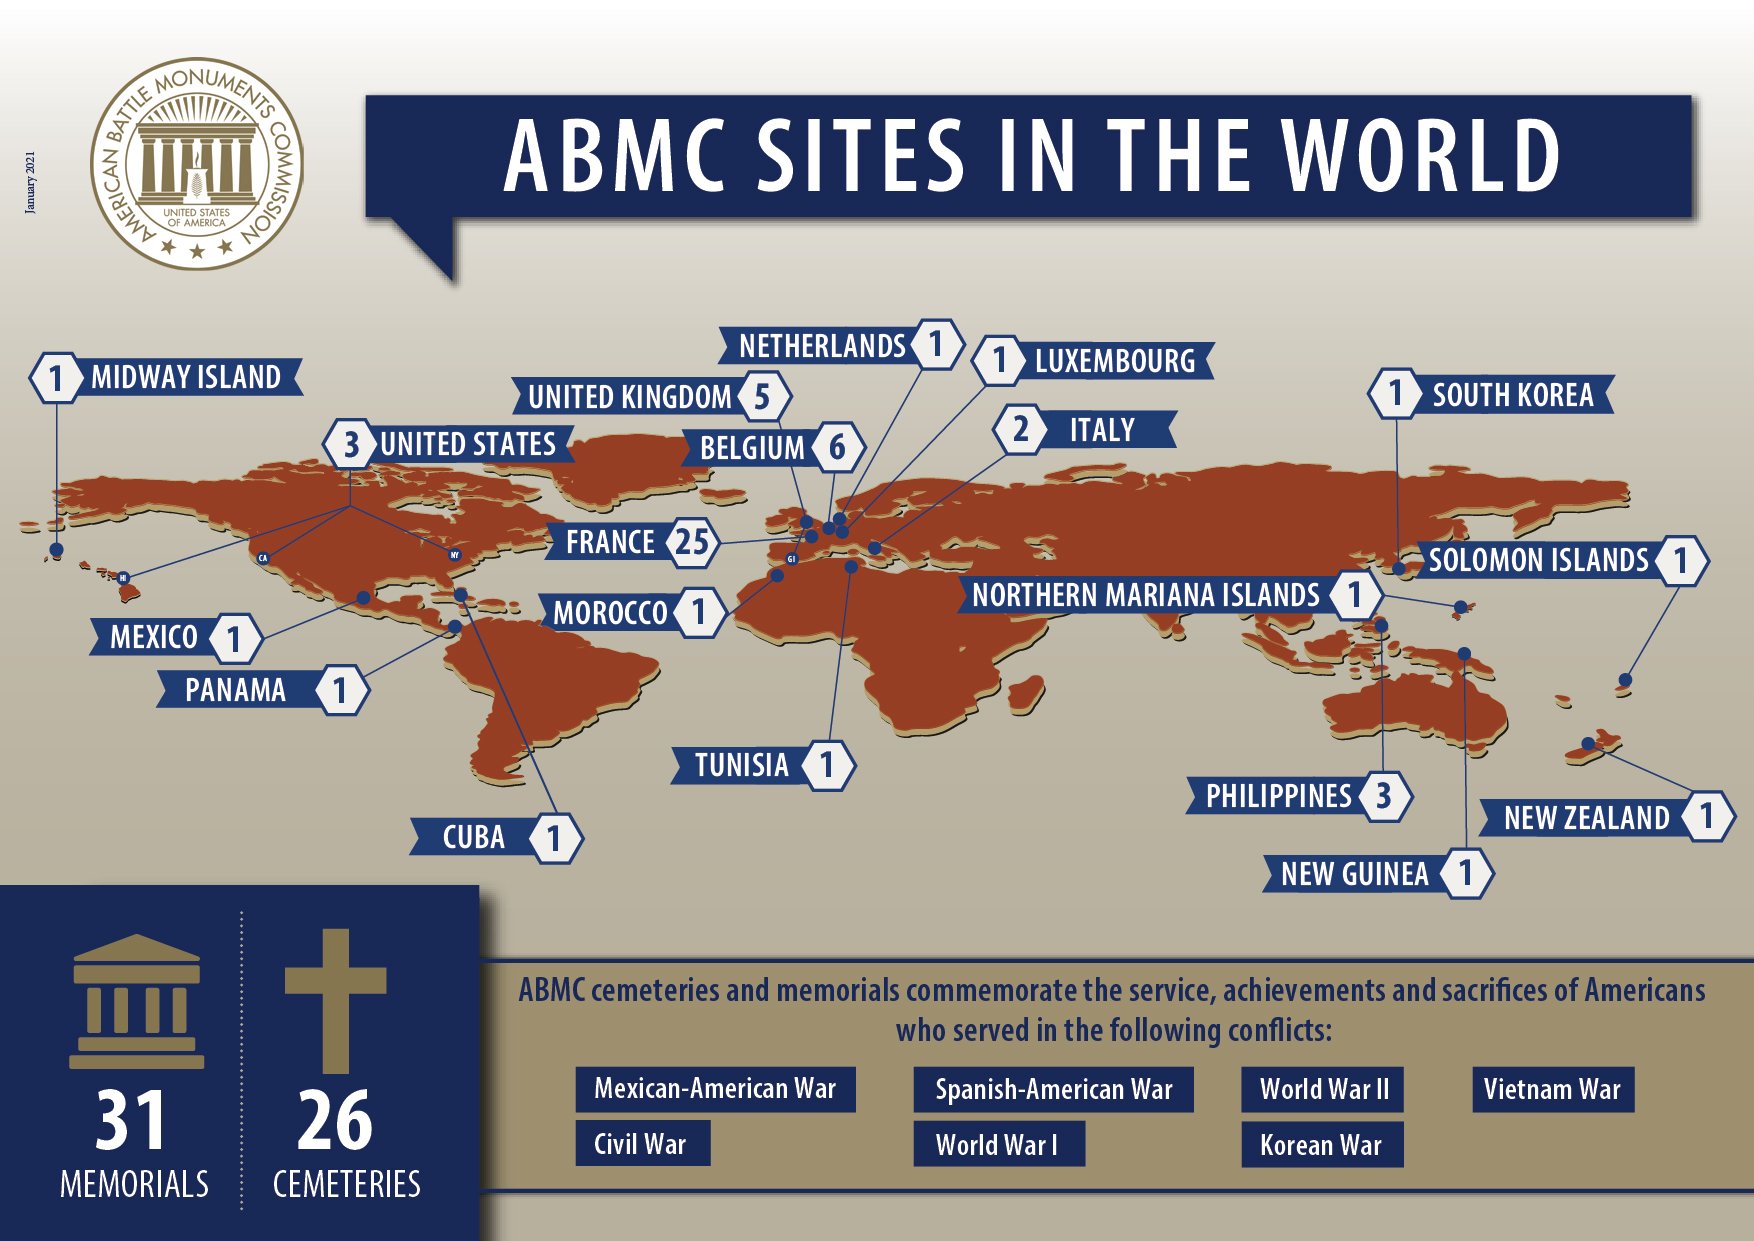 Official ABMC Template_ABMC_World Sites_Infographic_as of  24-FEB-2021-01.jpg